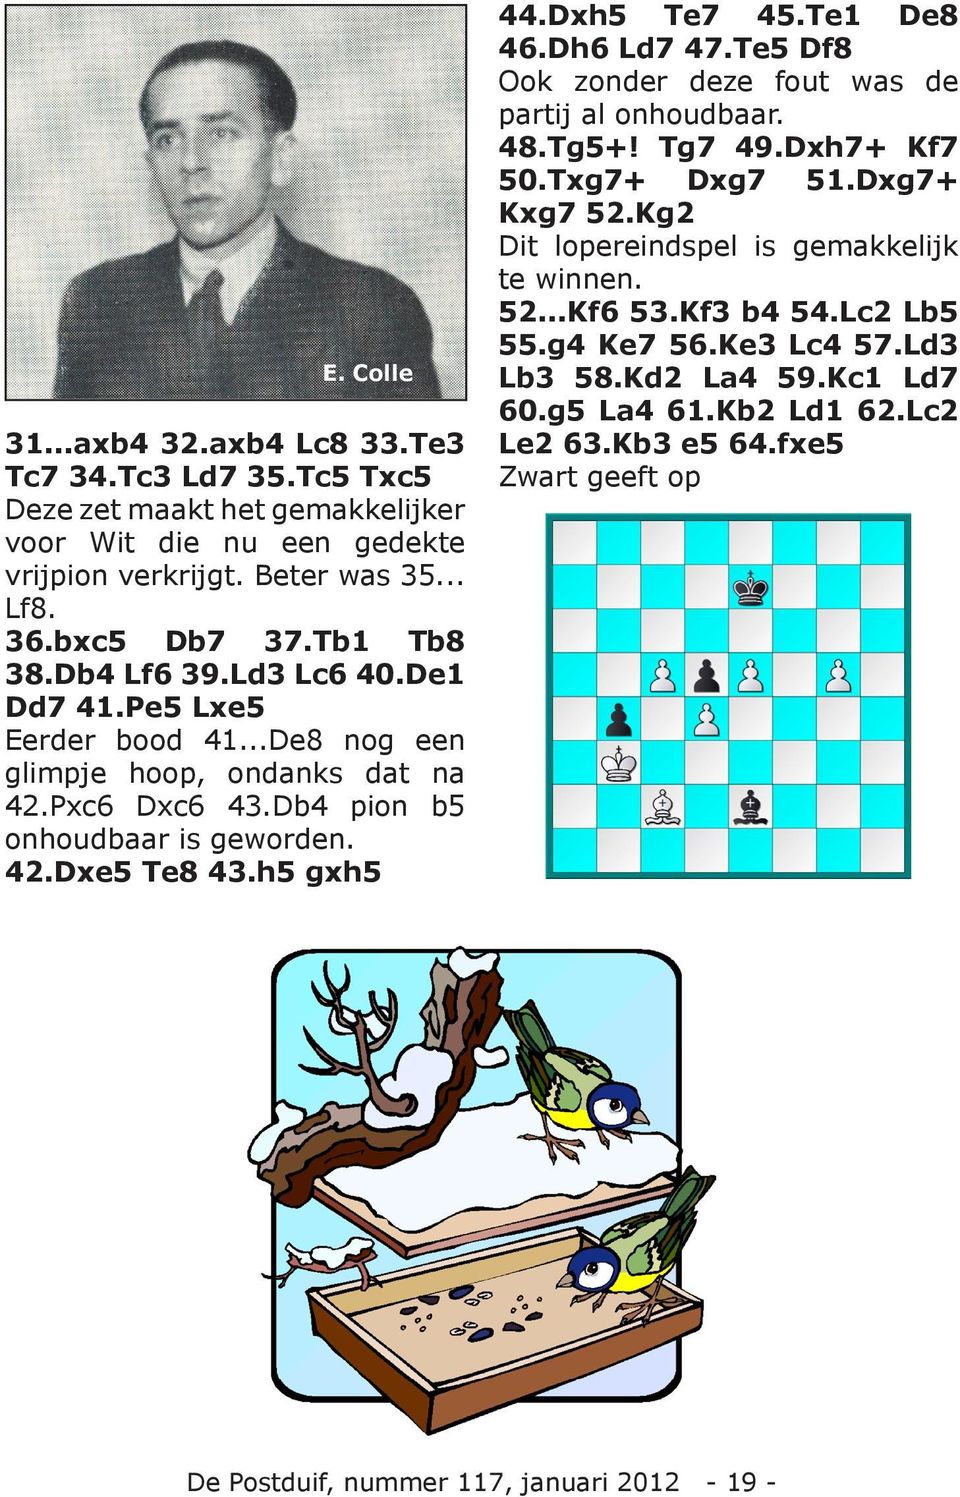 Dxh5 Te7 45.Te1 De8 46.Dh6 Ld7 47.Te5 Df8 Ook zonder deze fout was de partij al onhoudbaar. 48.Tg5+! Tg7 49.Dxh7+ Kf7 50.Txg7+ Dxg7 51.Dxg7+ Kxg7 52.